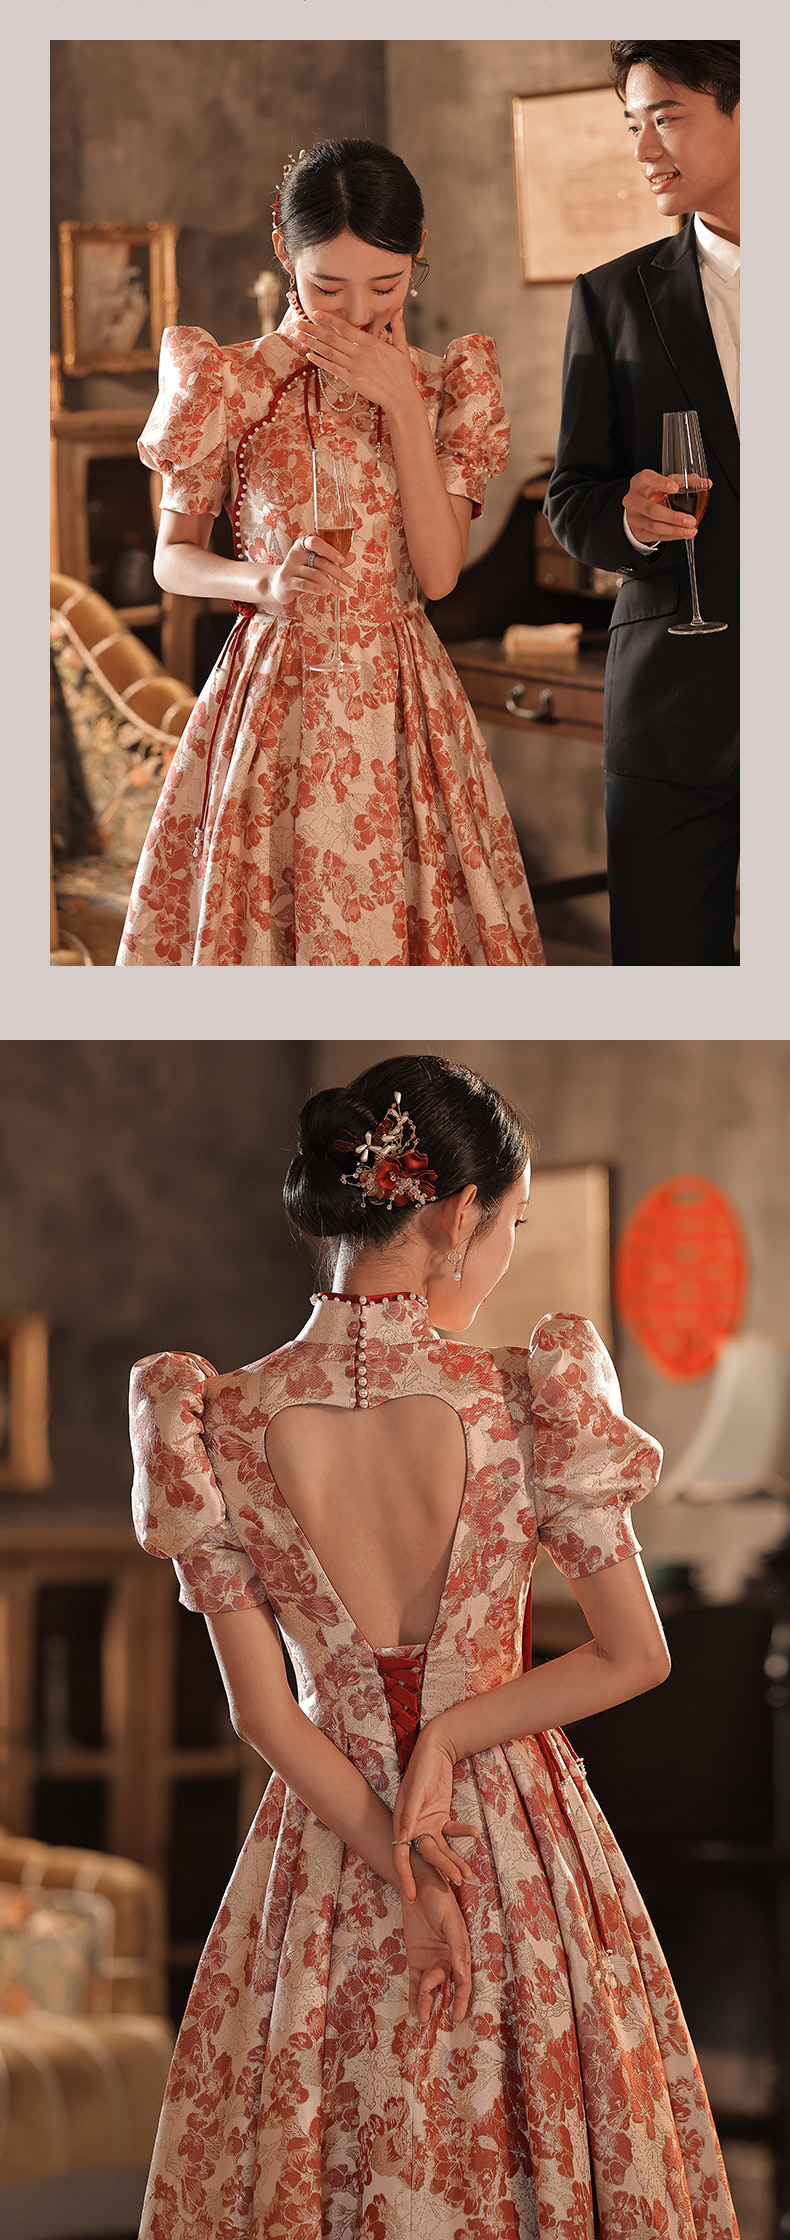 Unique-Luxury-Fashion-Vintage-Floral-Printed-Prom-Party-Dress09.jpg